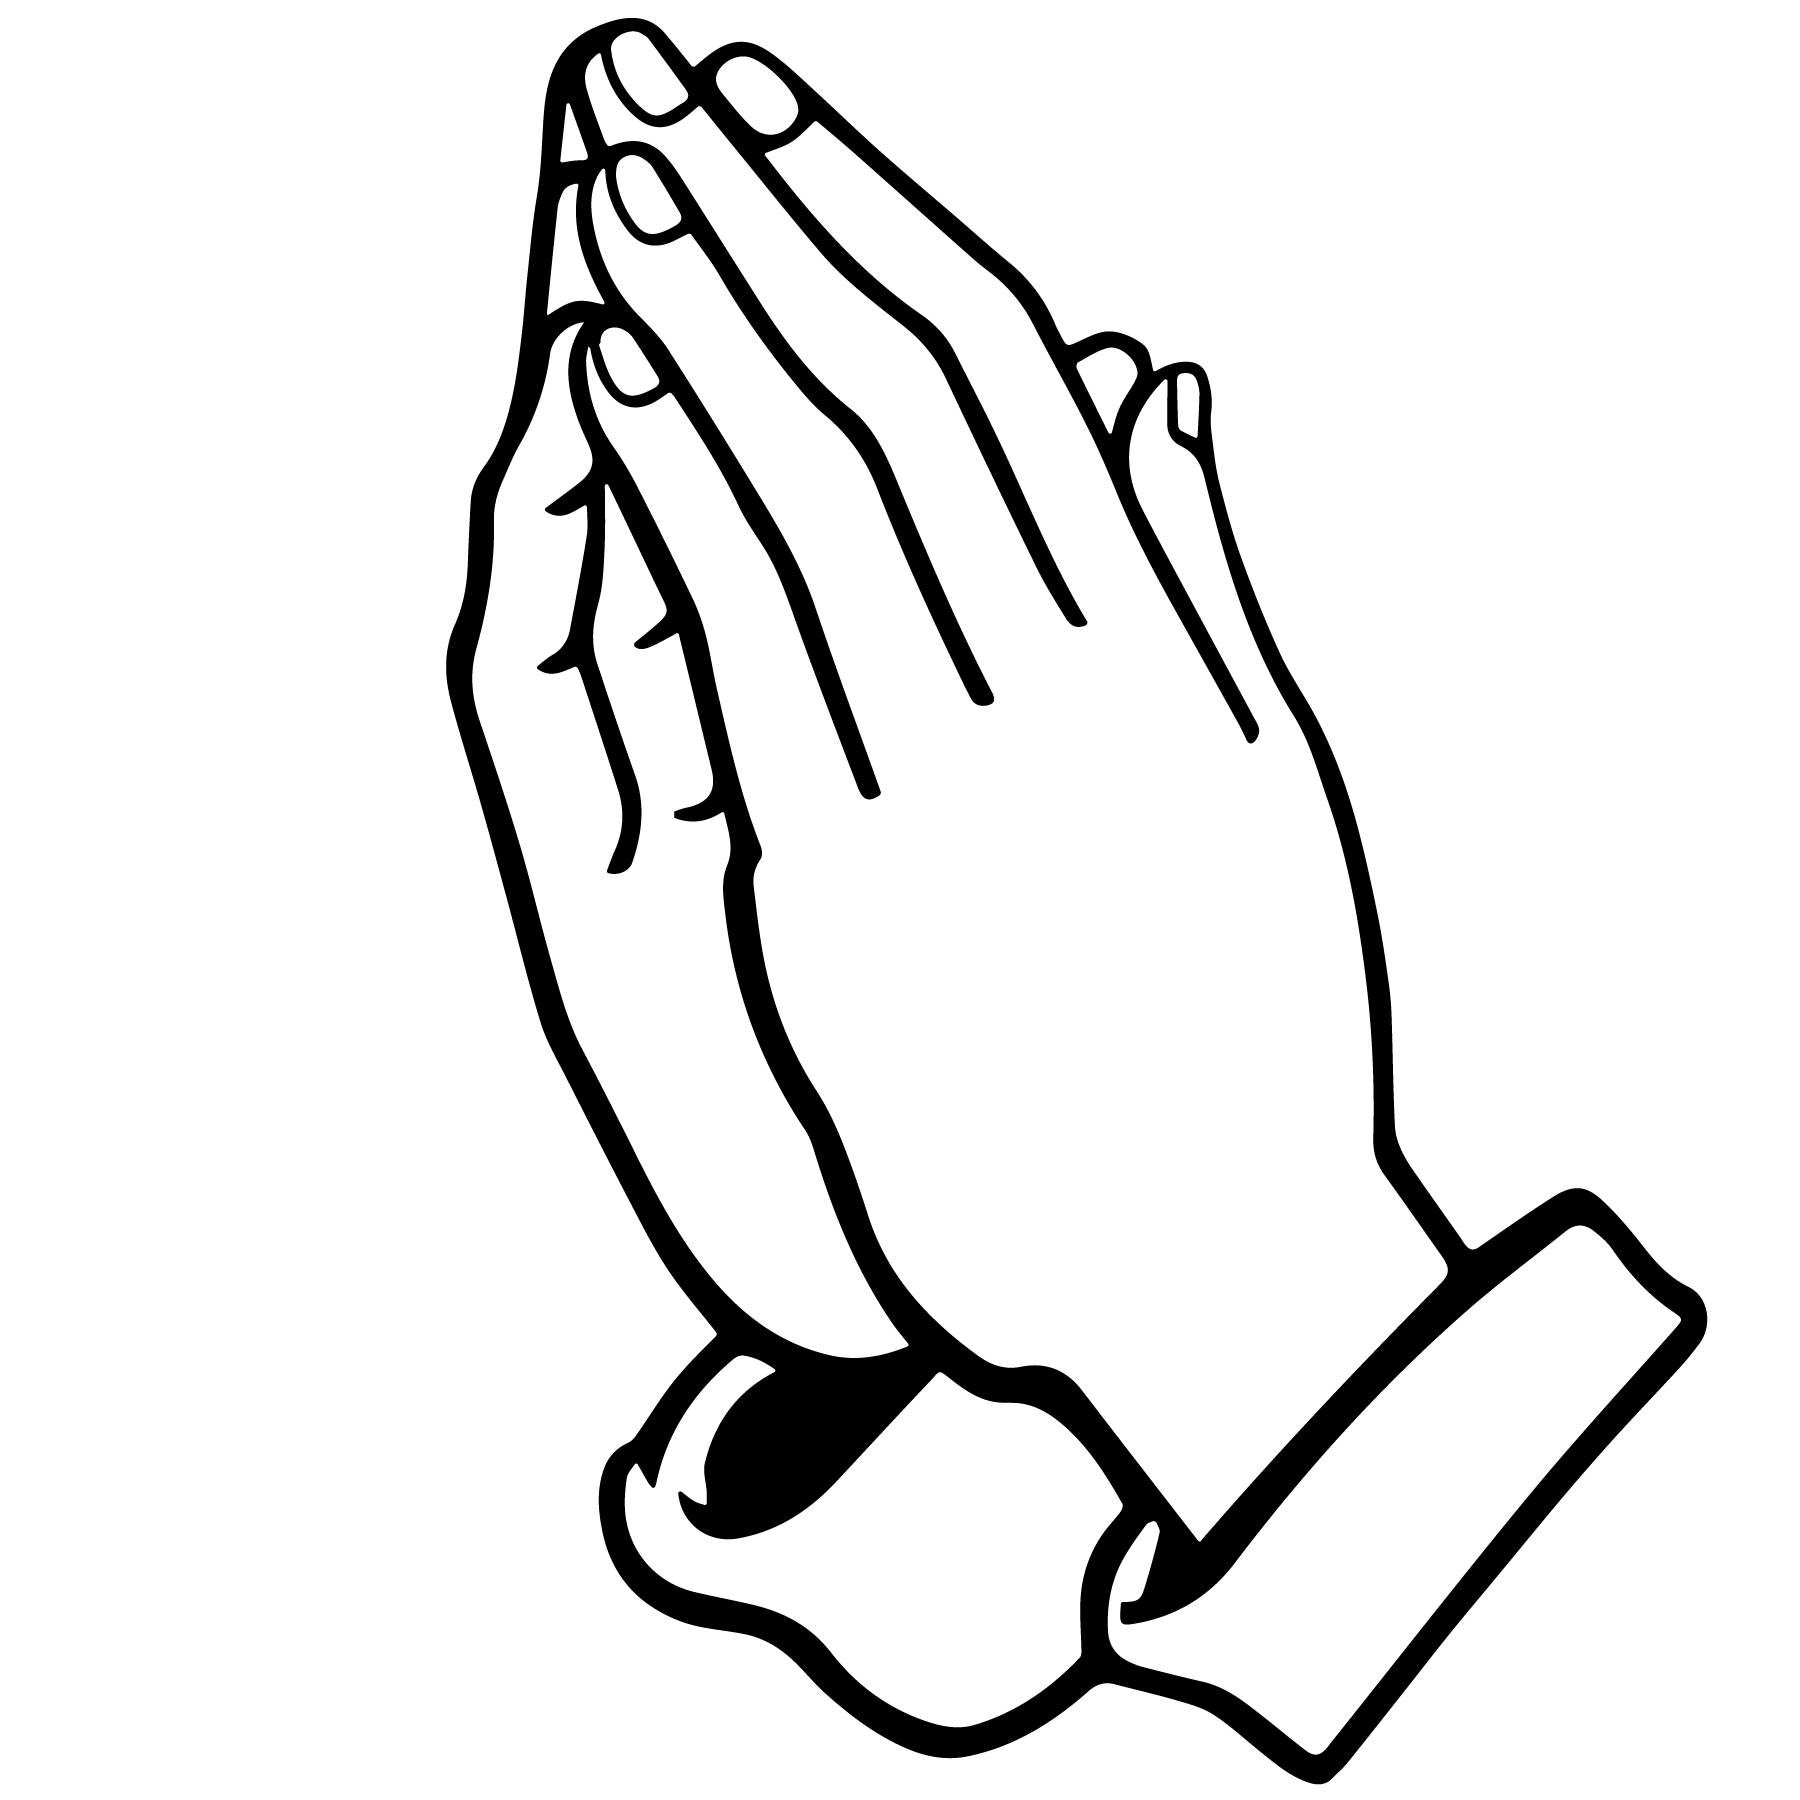 Praying Hands Svg Images - Layered SVG Cut File